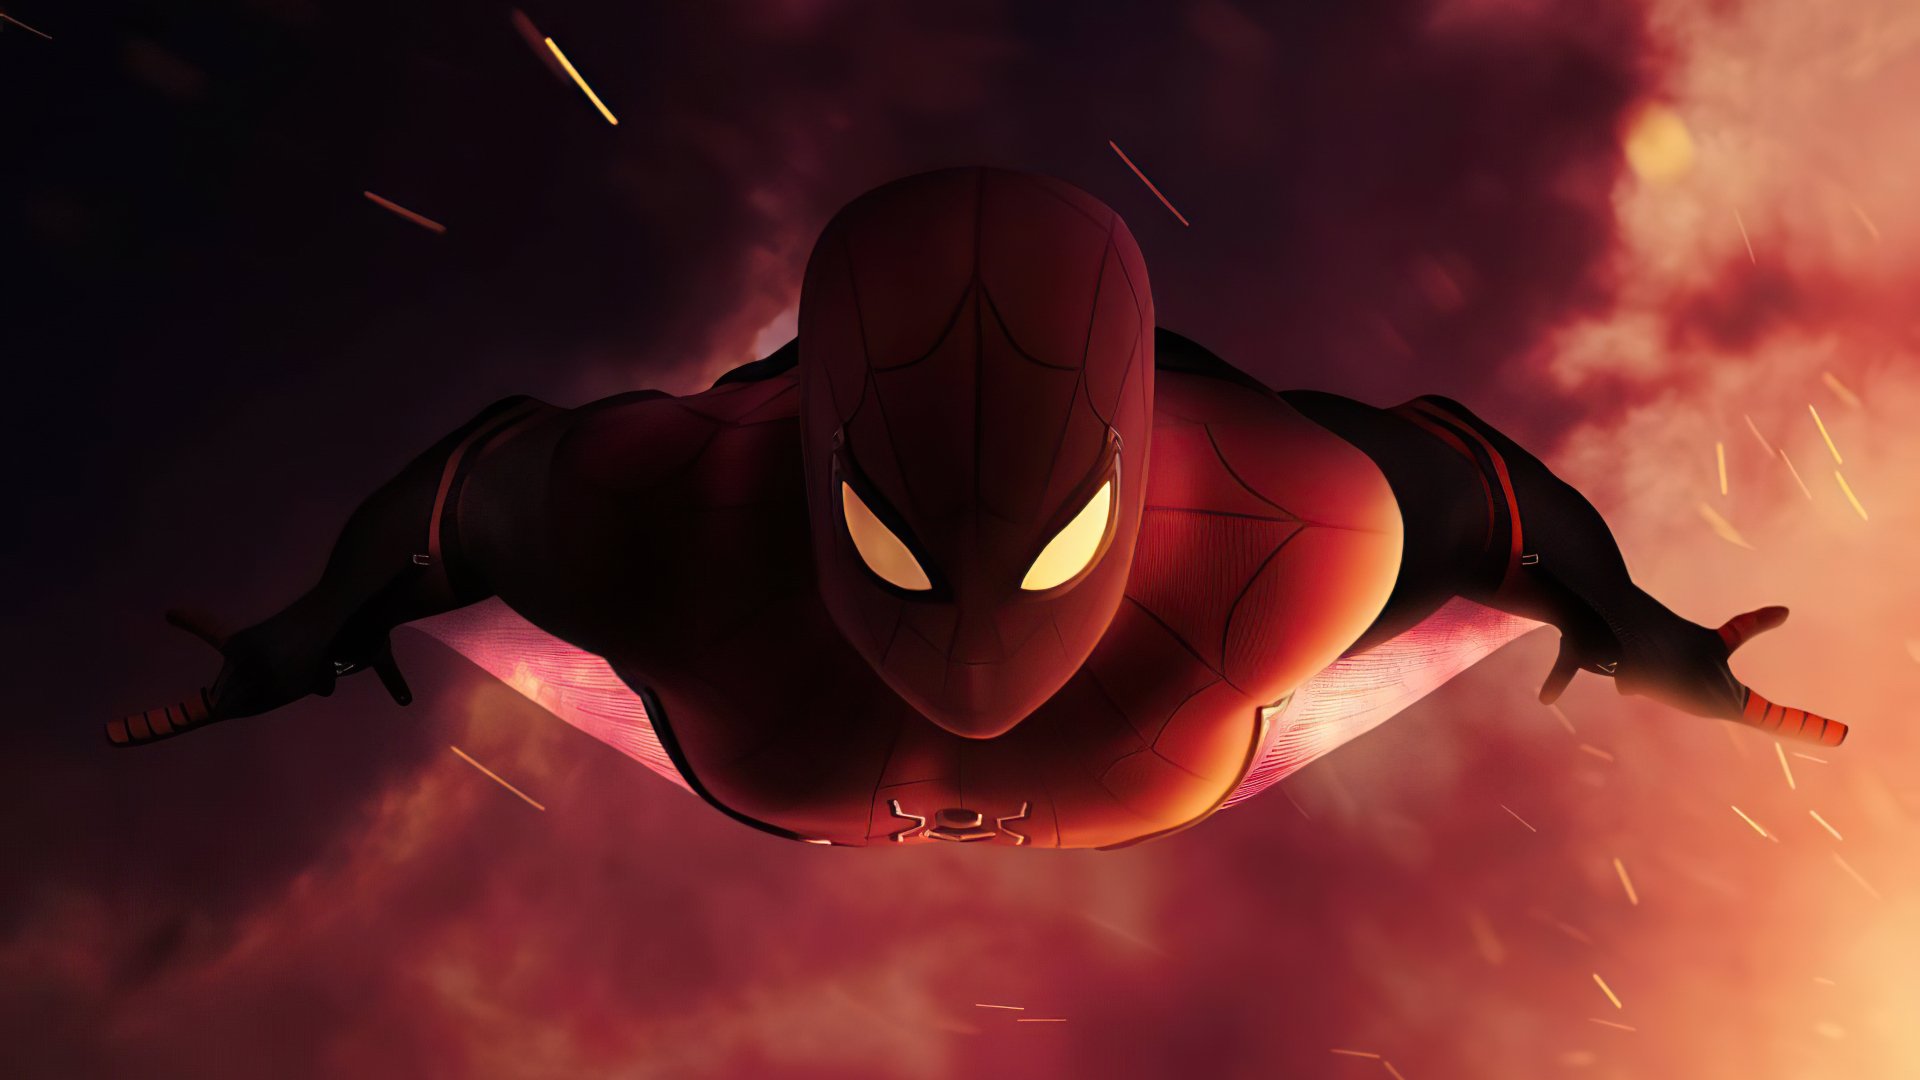 Download Spider Man Movie Spider Man Far From Home 4k Ultra Hd Wallpaper By Yadvender Singh Rana